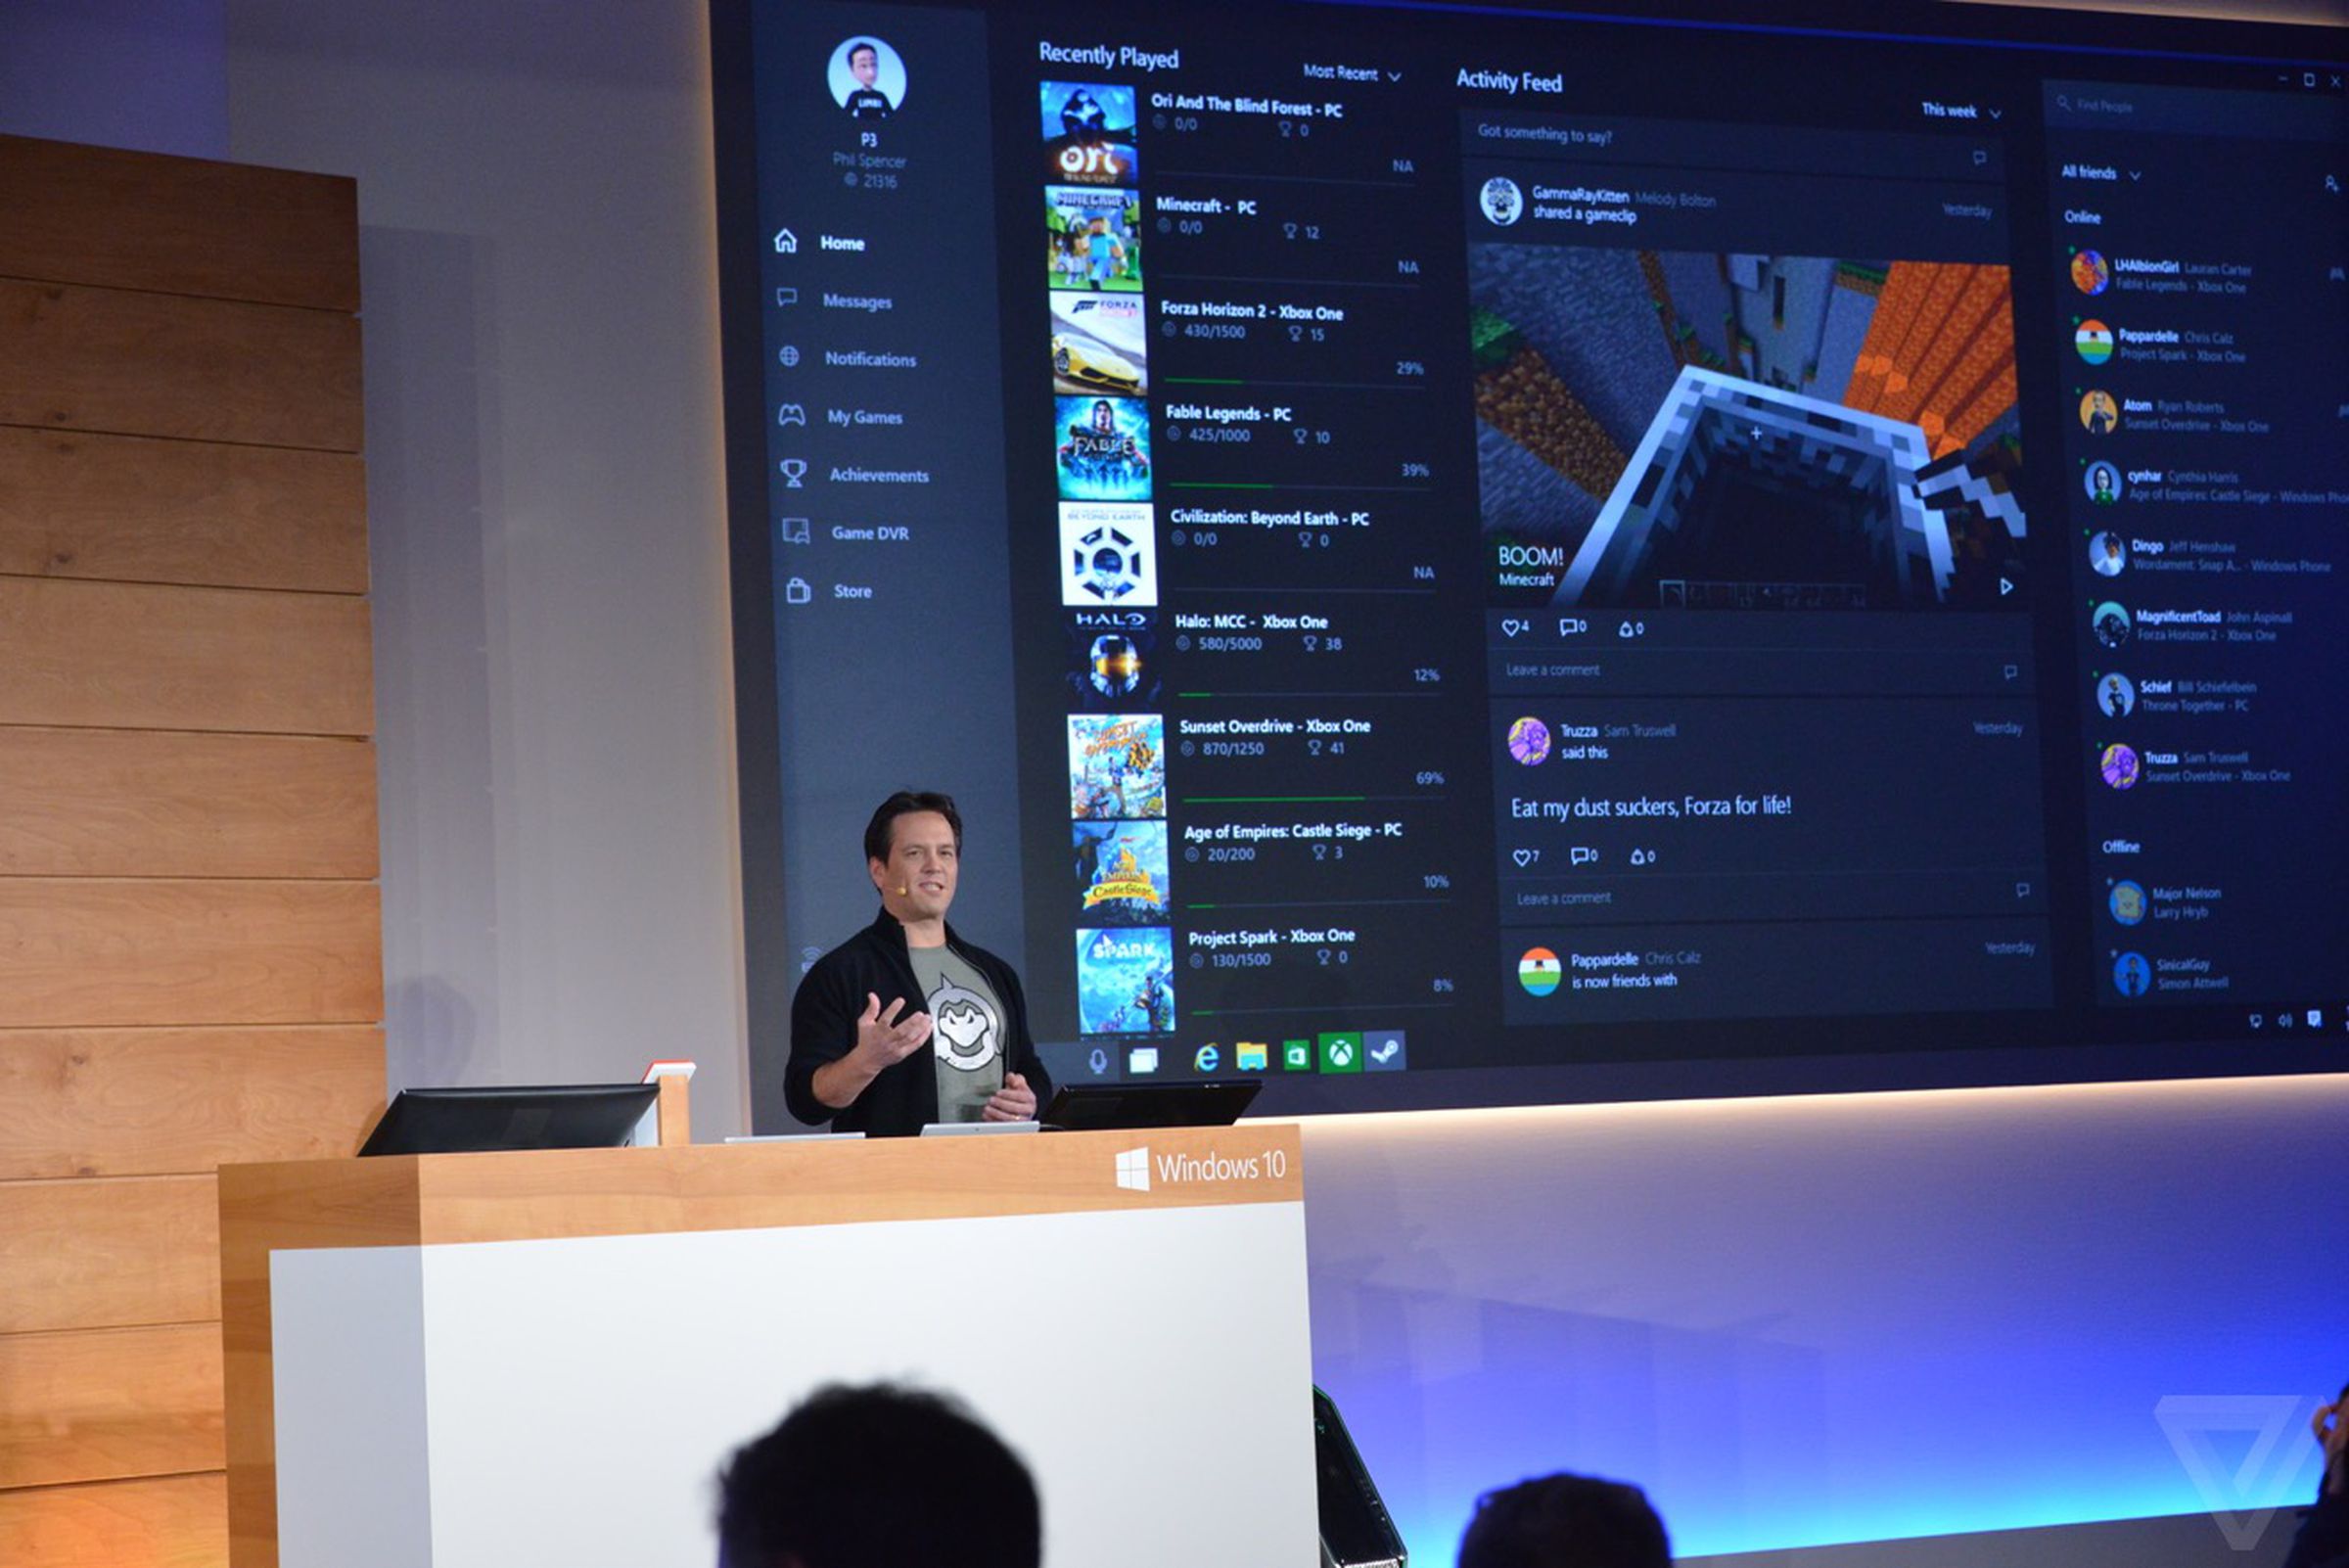 Microsoft Windows 10 Xbox app in photos